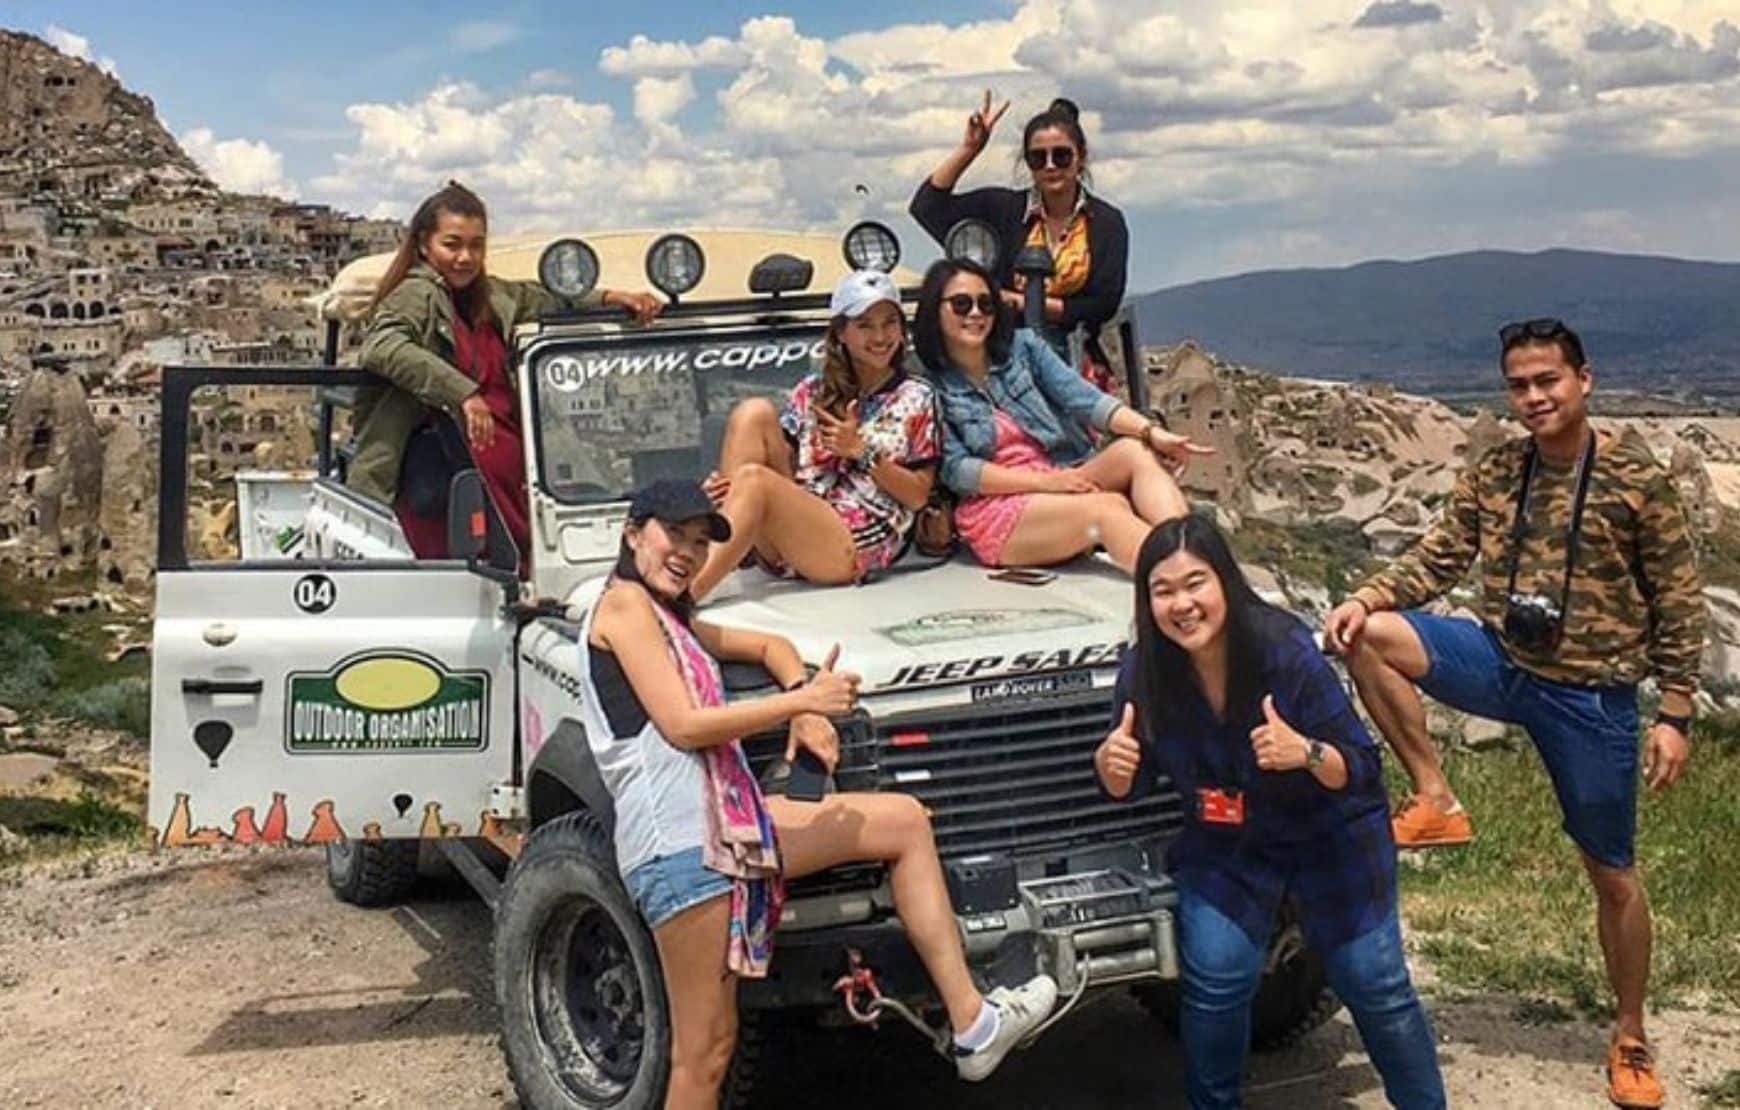 Jeep Safari in Cappadocia - a small group doing safari together